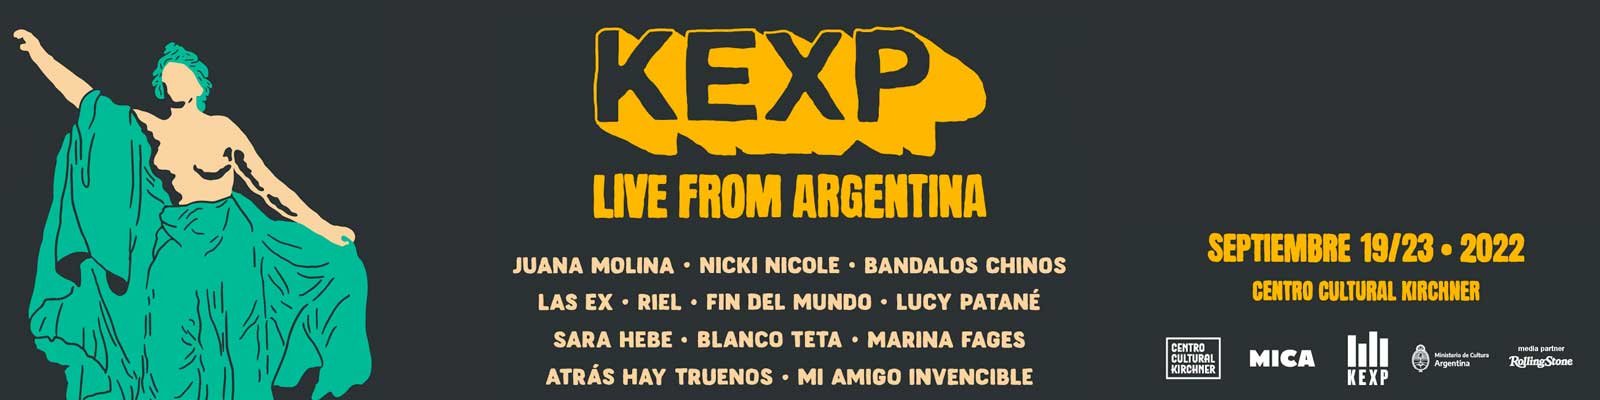 KEXP-Argentina-Header-2.jpg